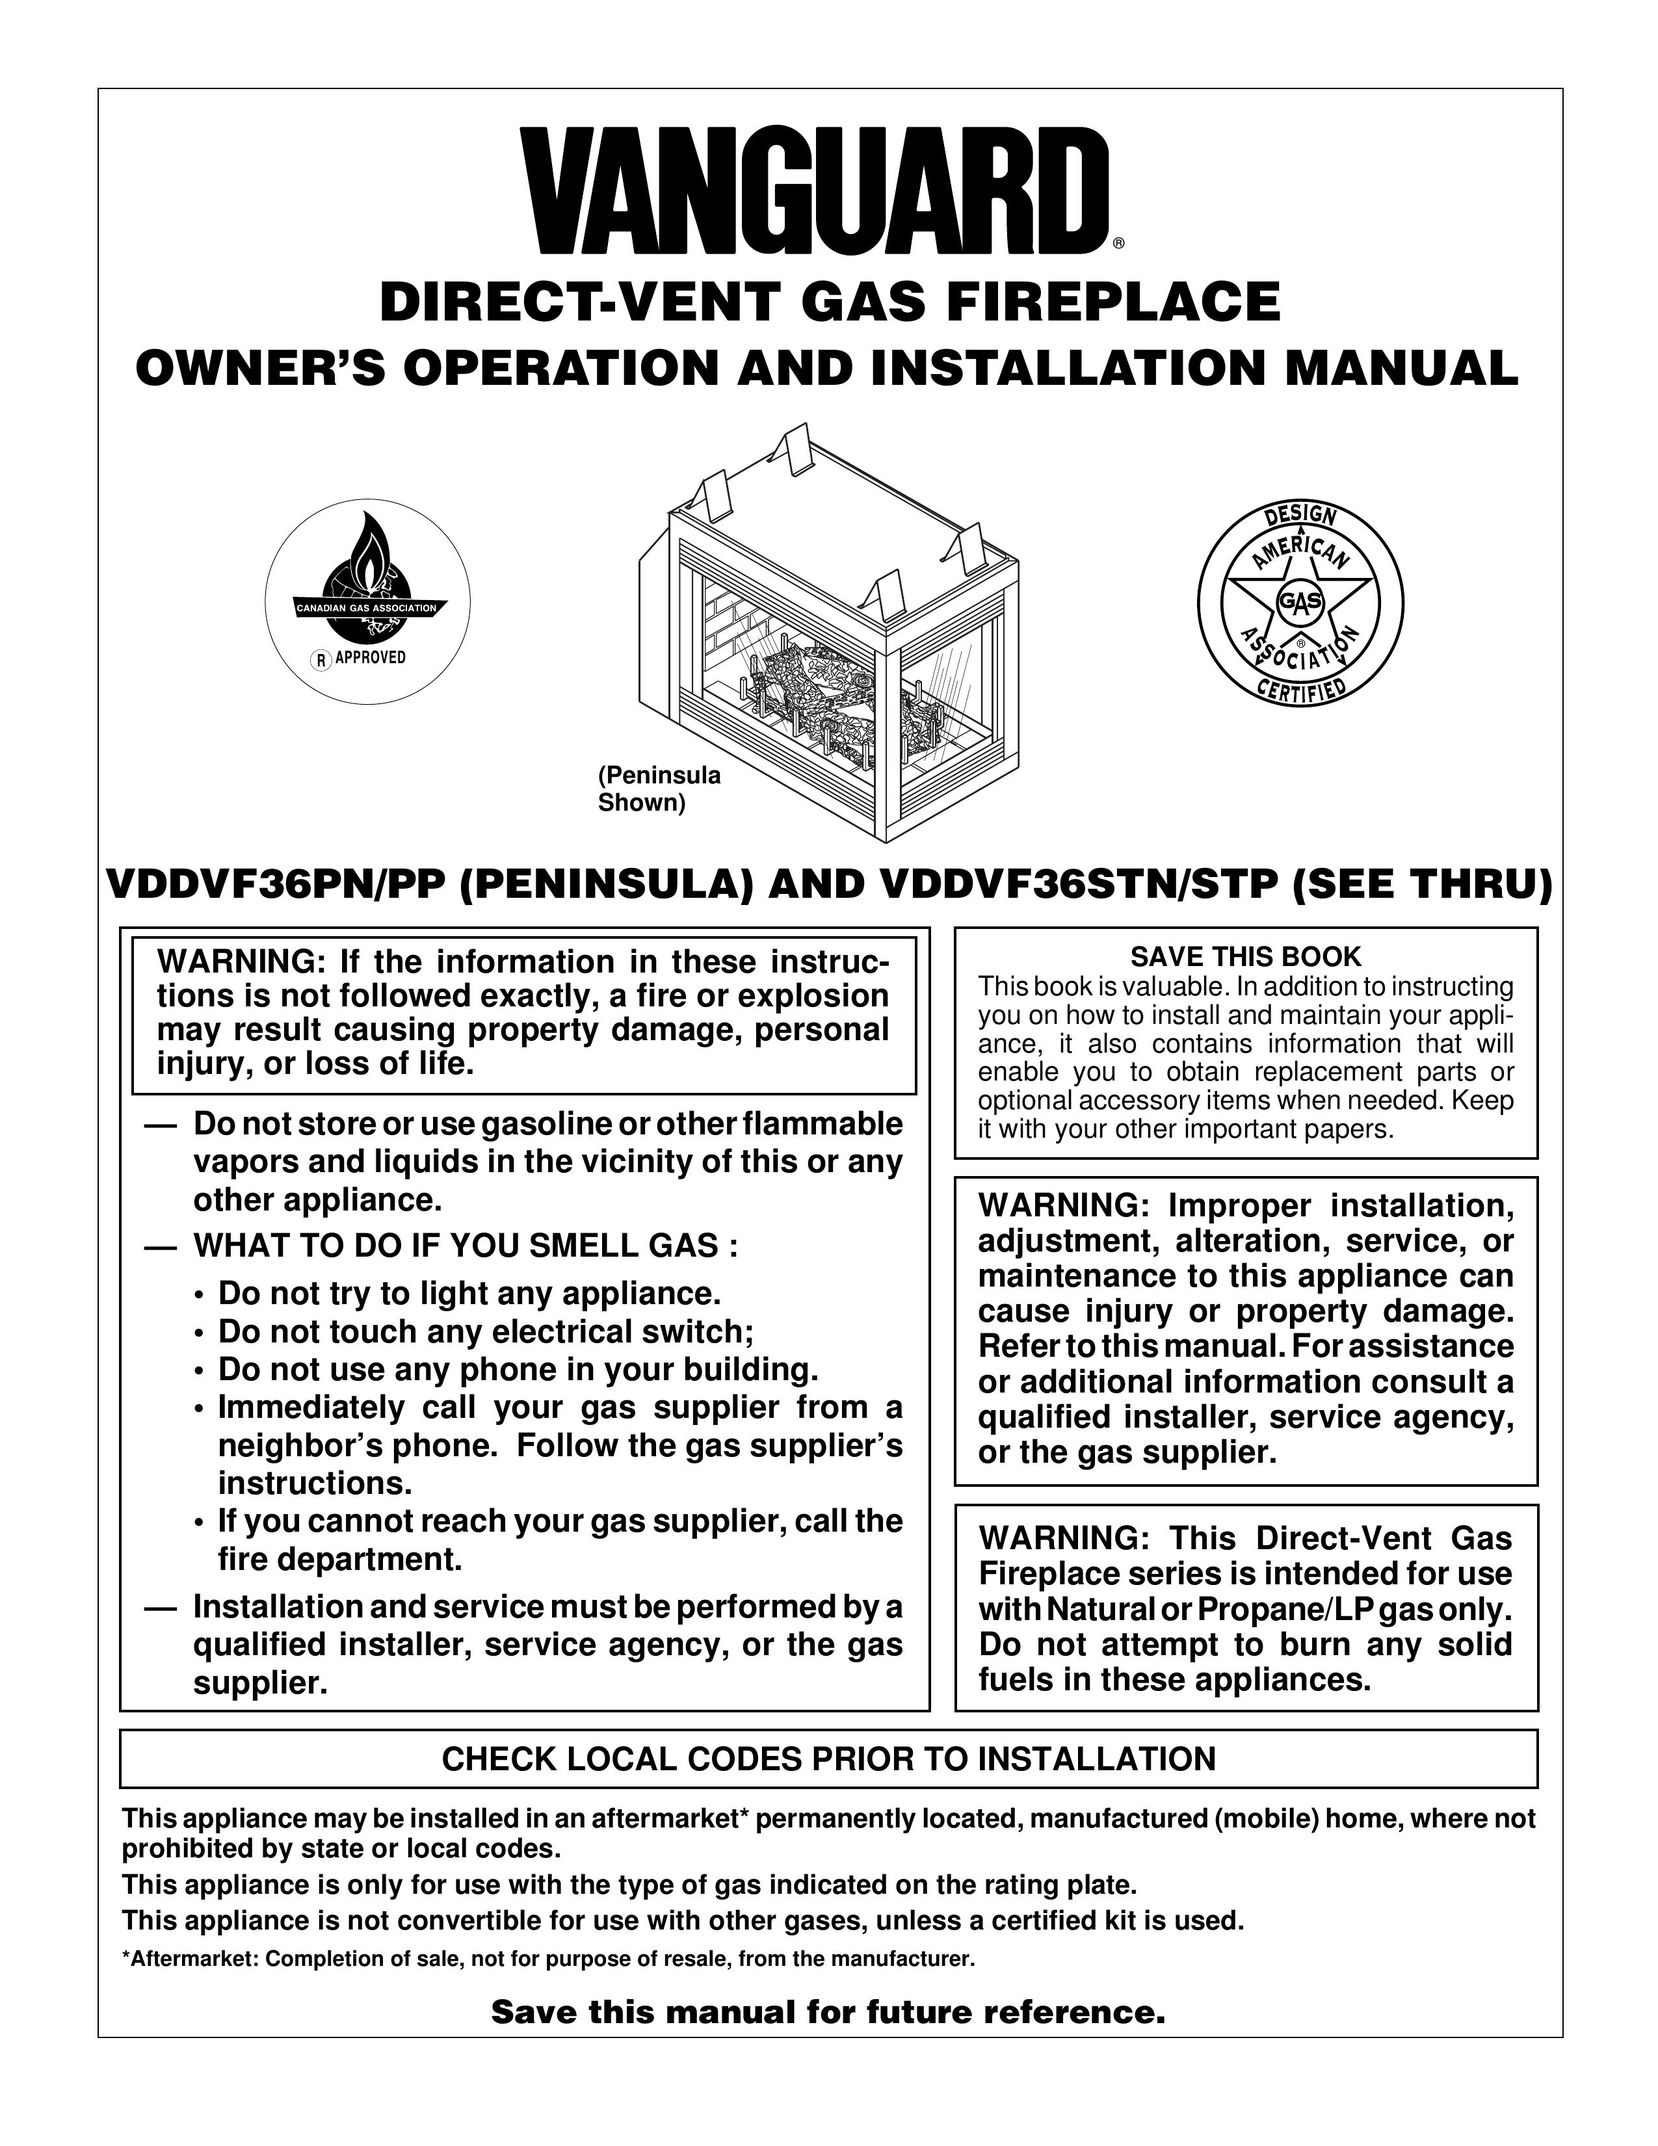 Vanguard Heating VDDVF36STN/STP Indoor Fireplace User Manual